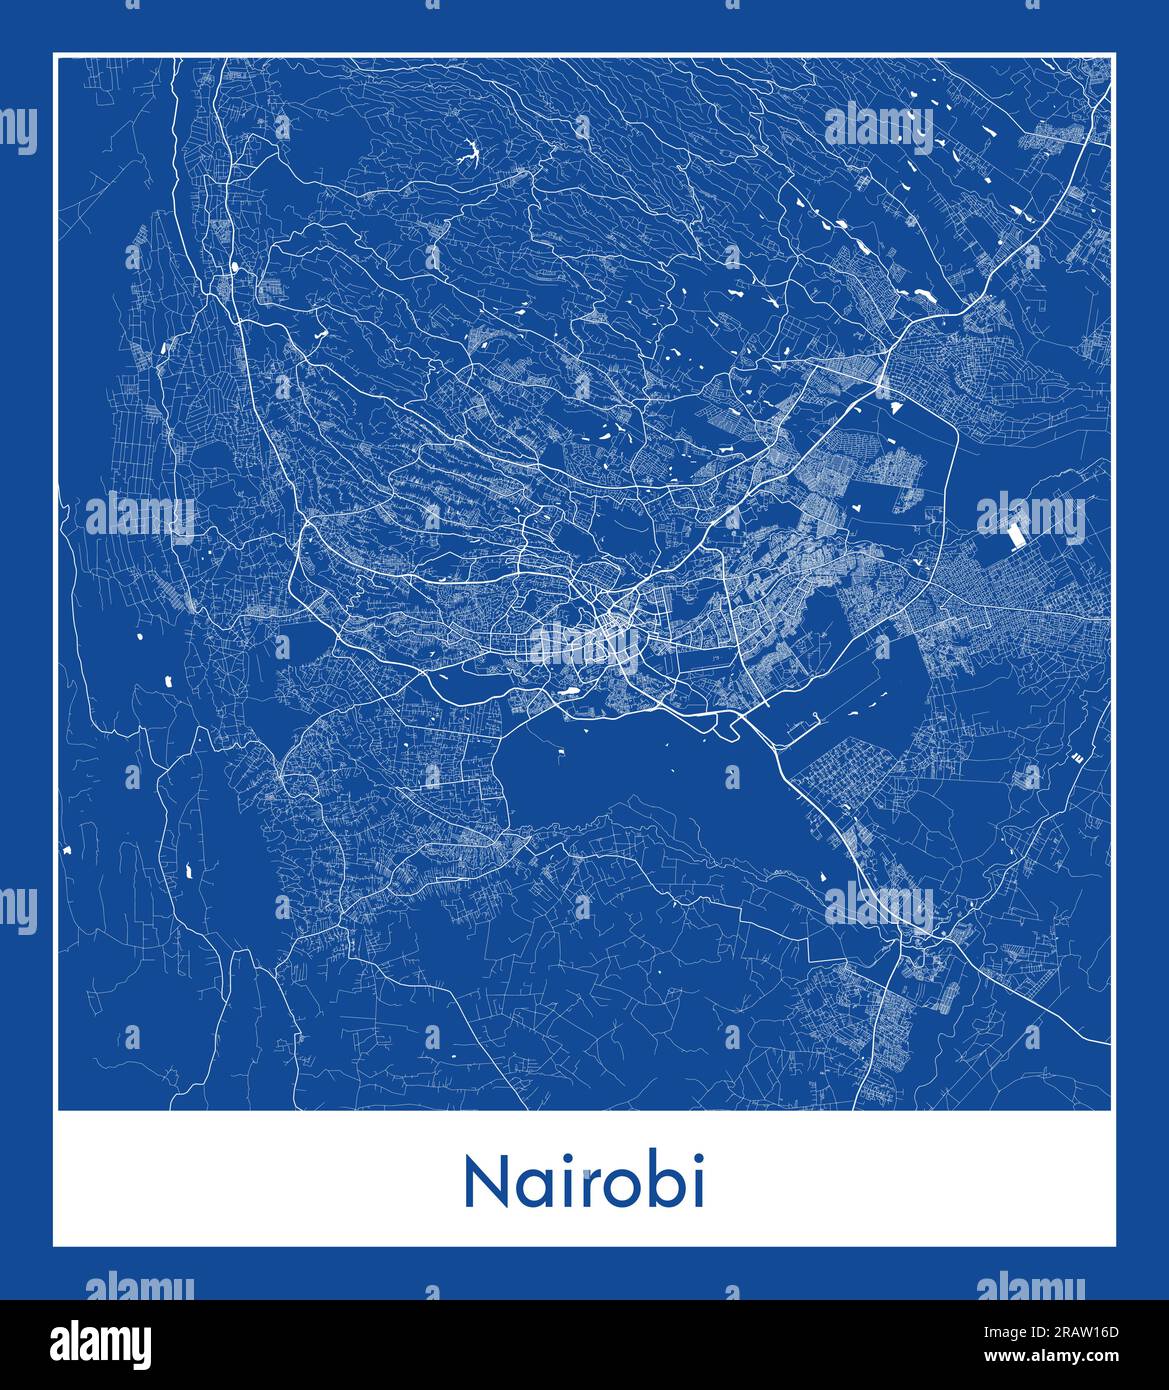 Nairobi Kenya Africa città mappa stampa blu illustrazione vettoriale Illustrazione Vettoriale